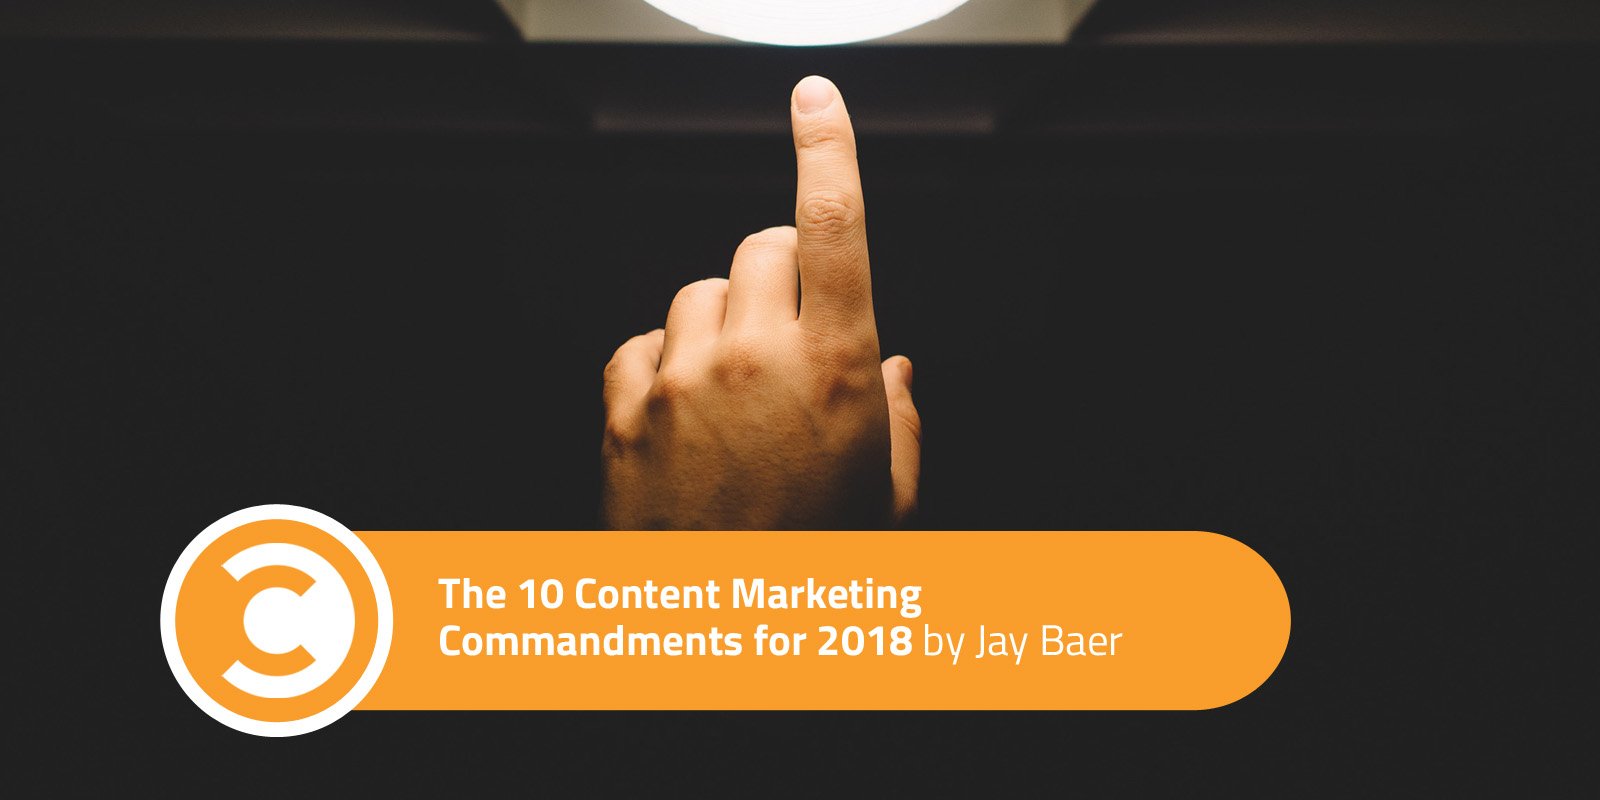 The 10 Content Marketing Commandments for 2018